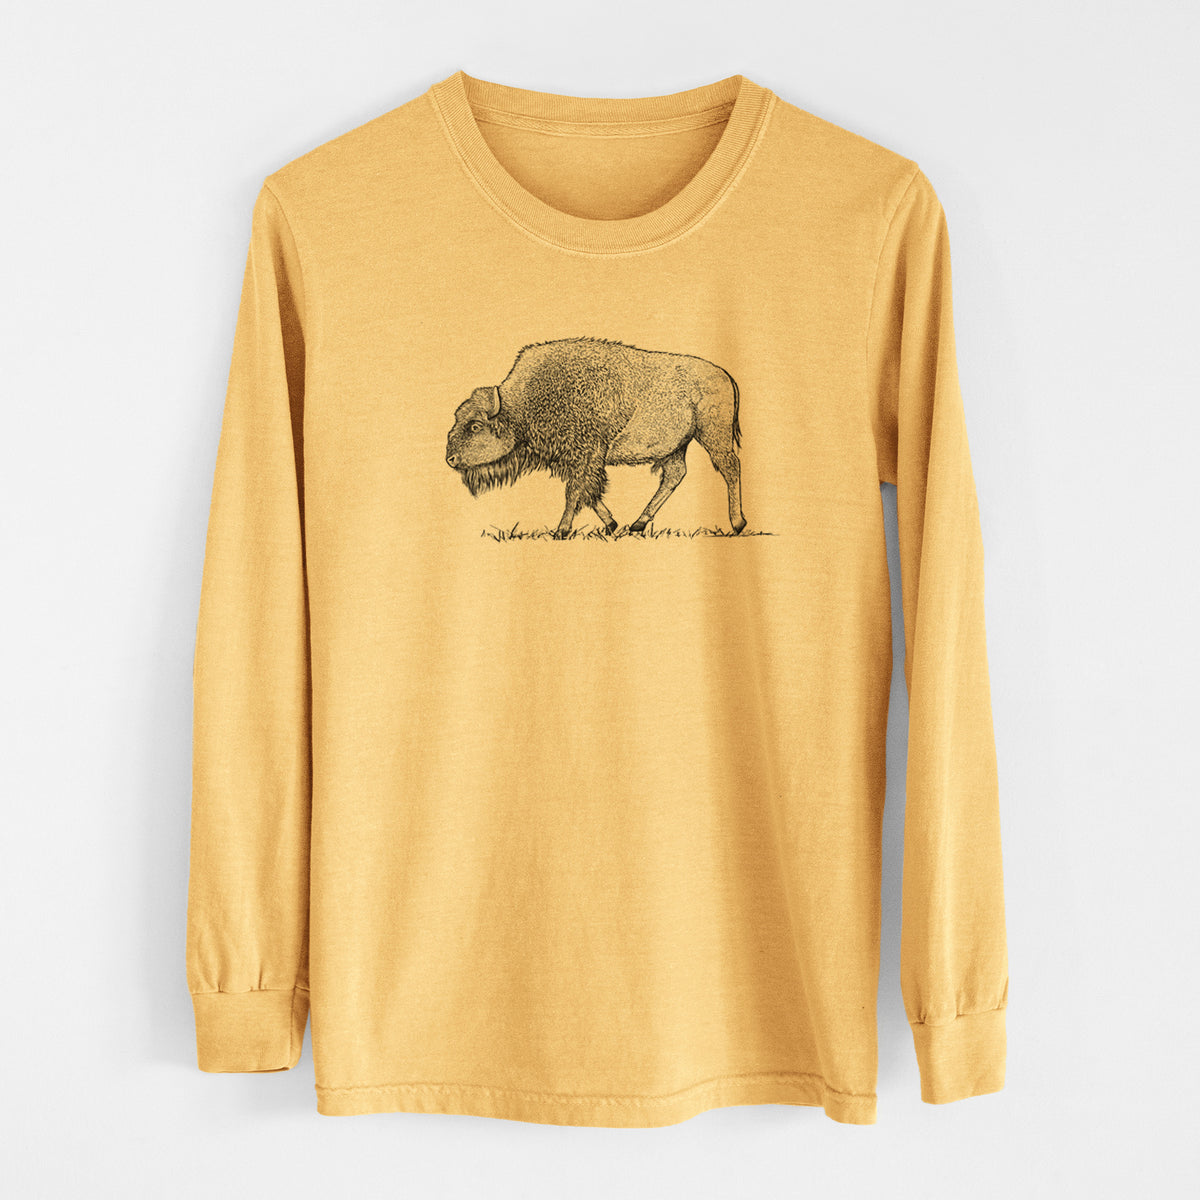 American Bison / Buffalo - Bison bison - Heavyweight 100% Cotton Long Sleeve